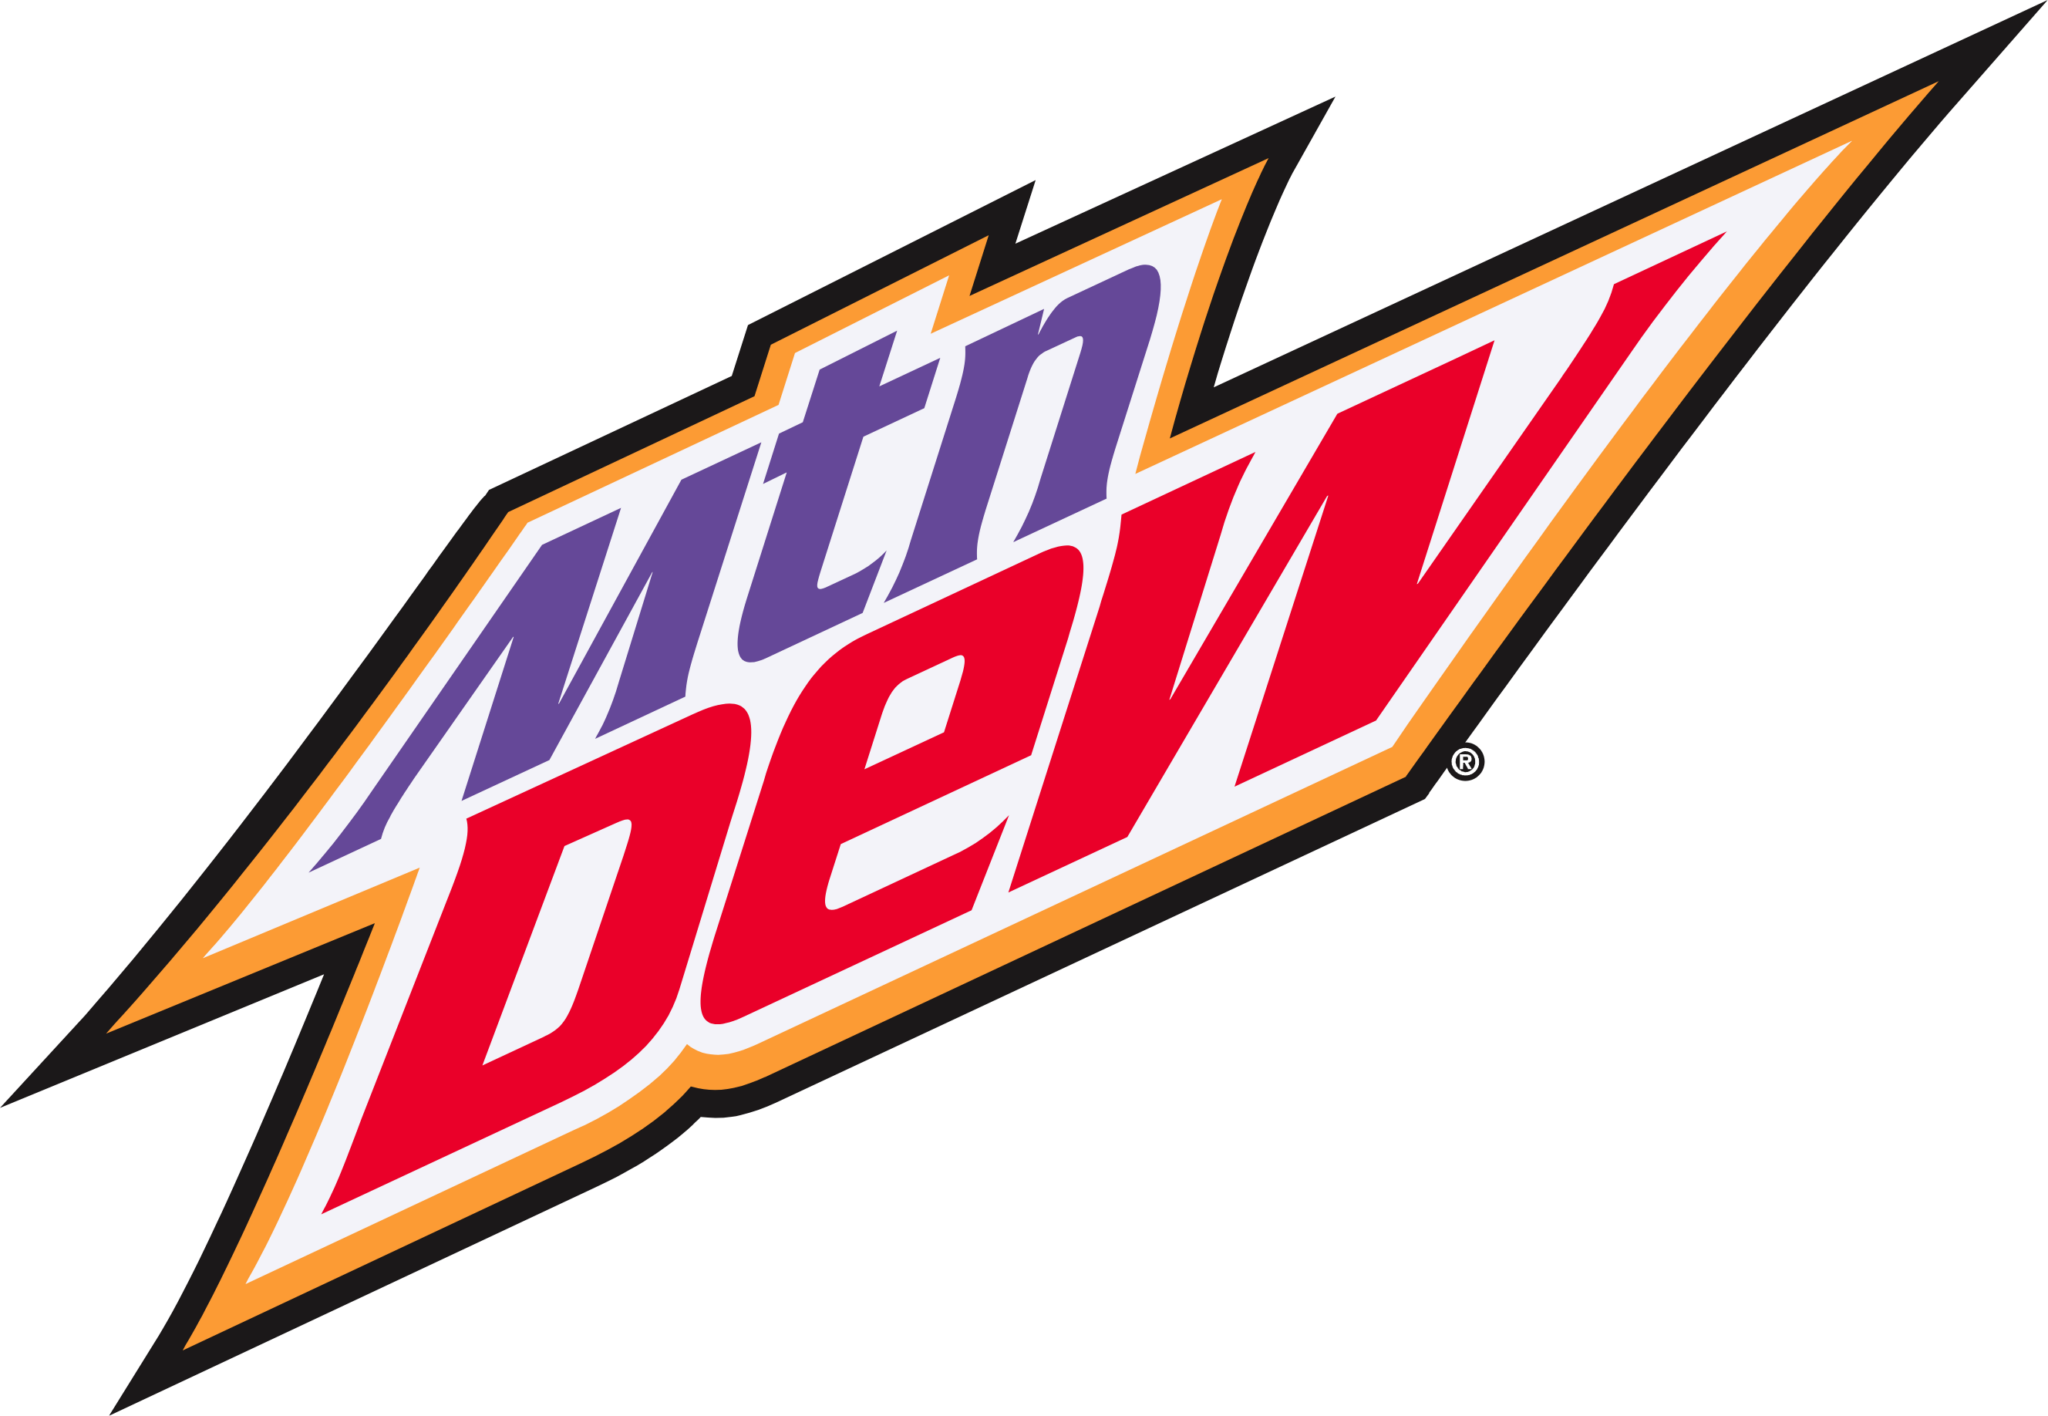 Mtn Dew VooDew creeps back new mystery flavor for Halloween